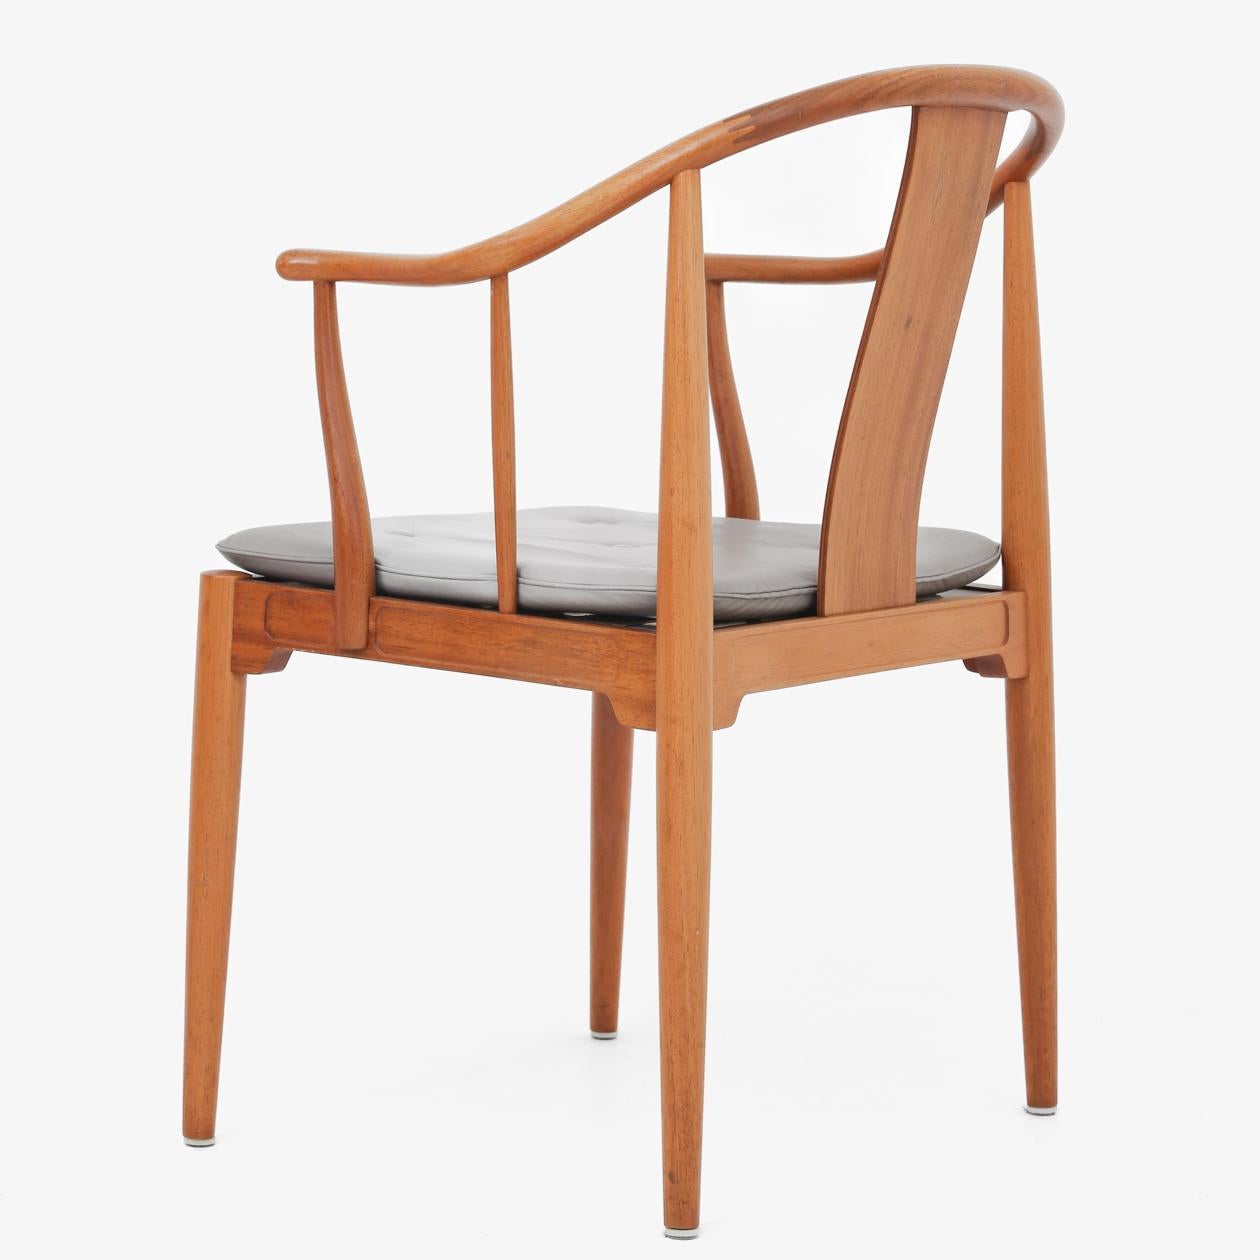 FH 4283 - China chair in mahogany and cushion in light grey leather. Hans J. Wegner / Fritz Hansen.